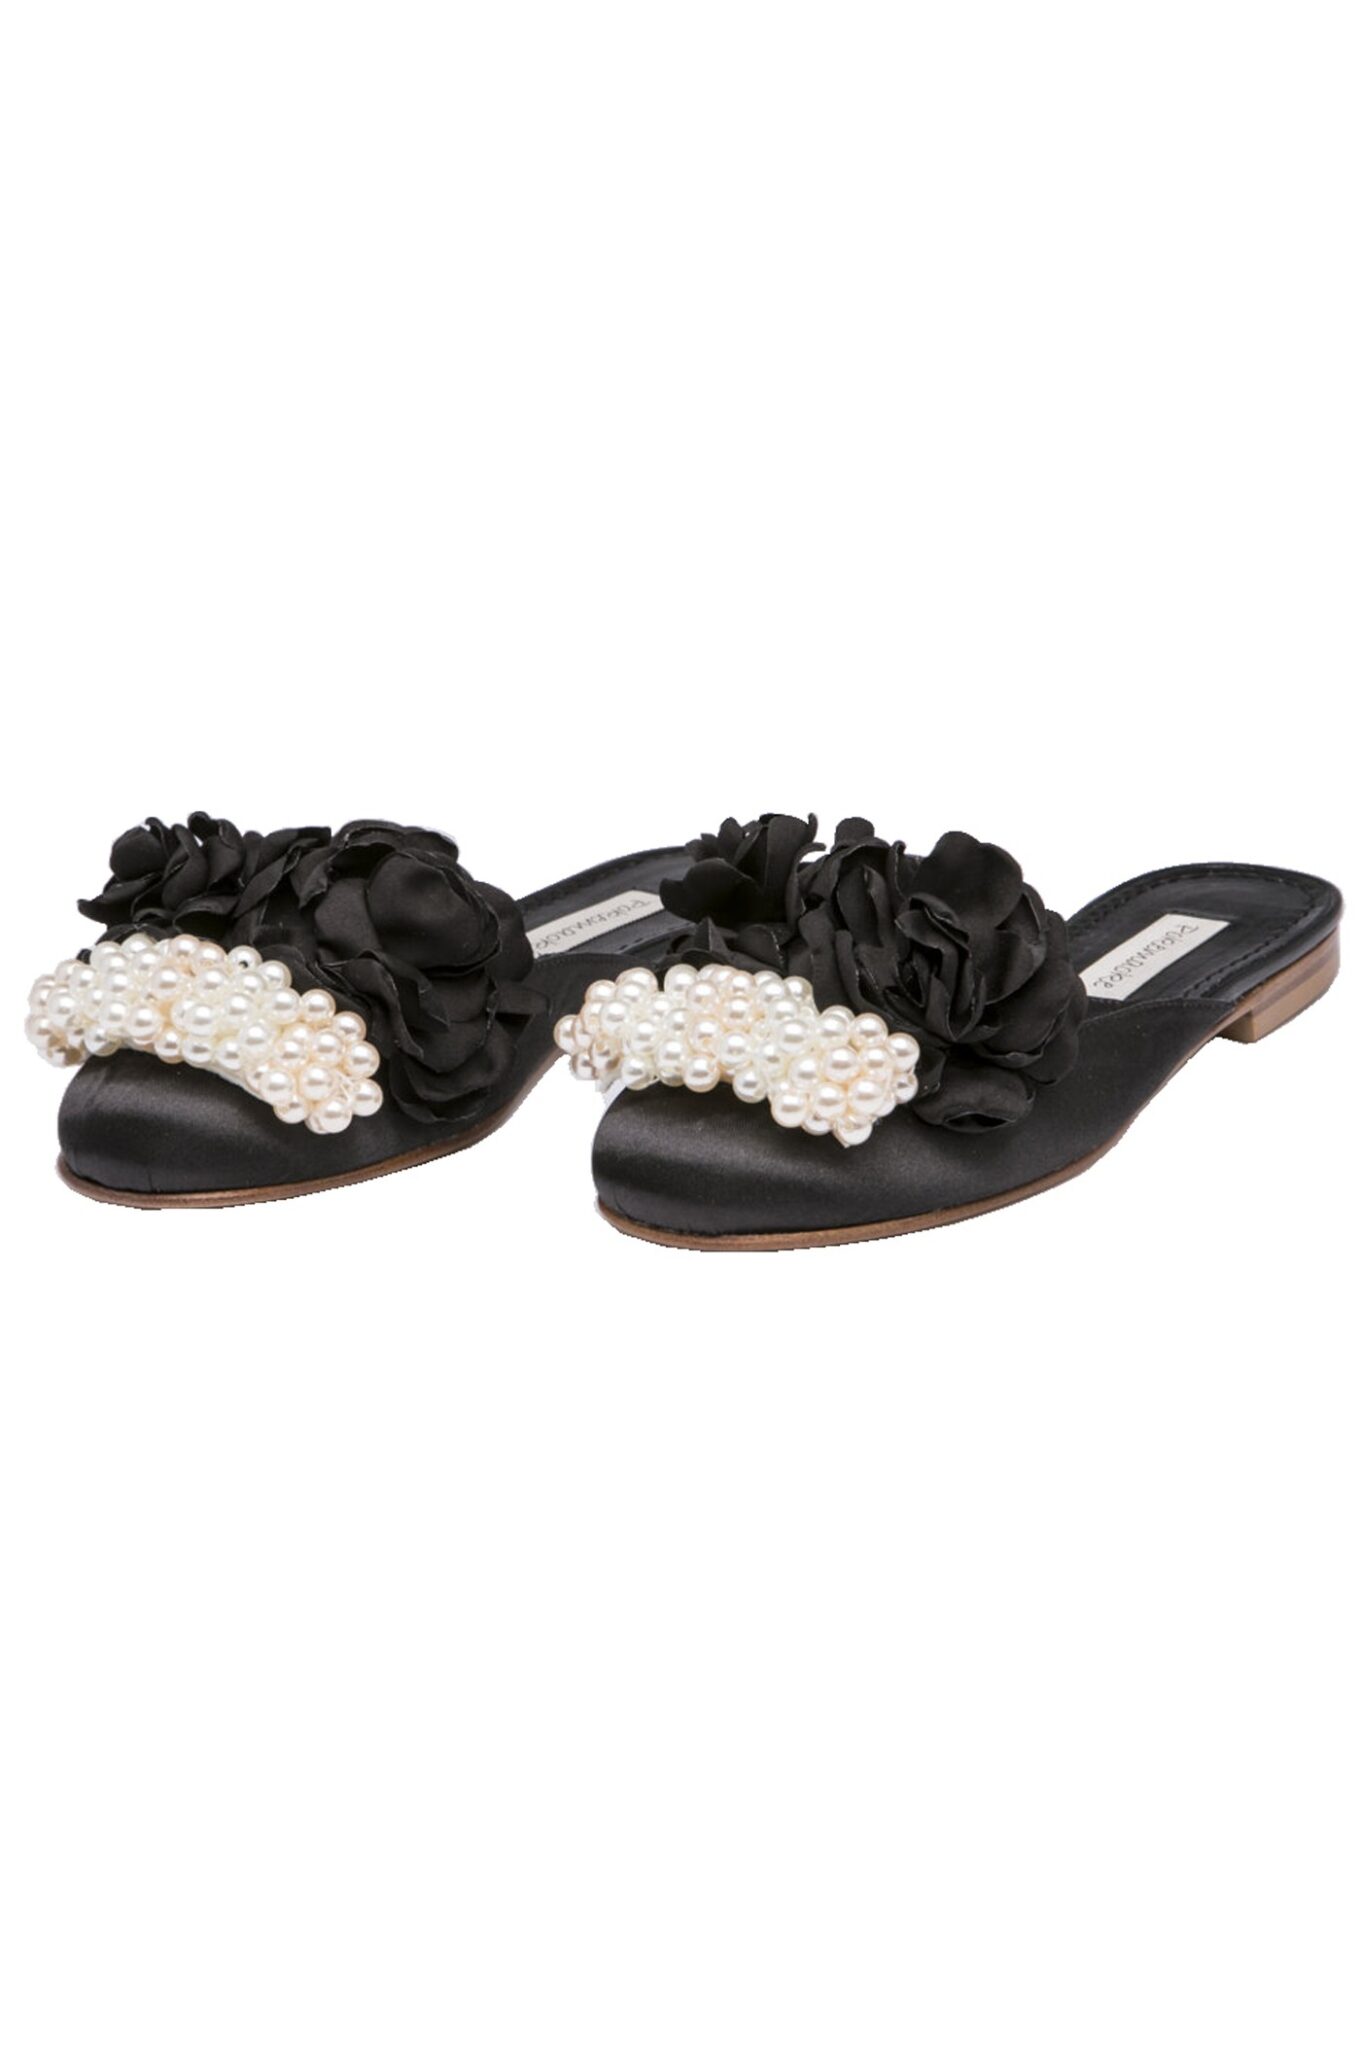 Black pearls and flowers embellished elegant satin slippers - Pokemaoke